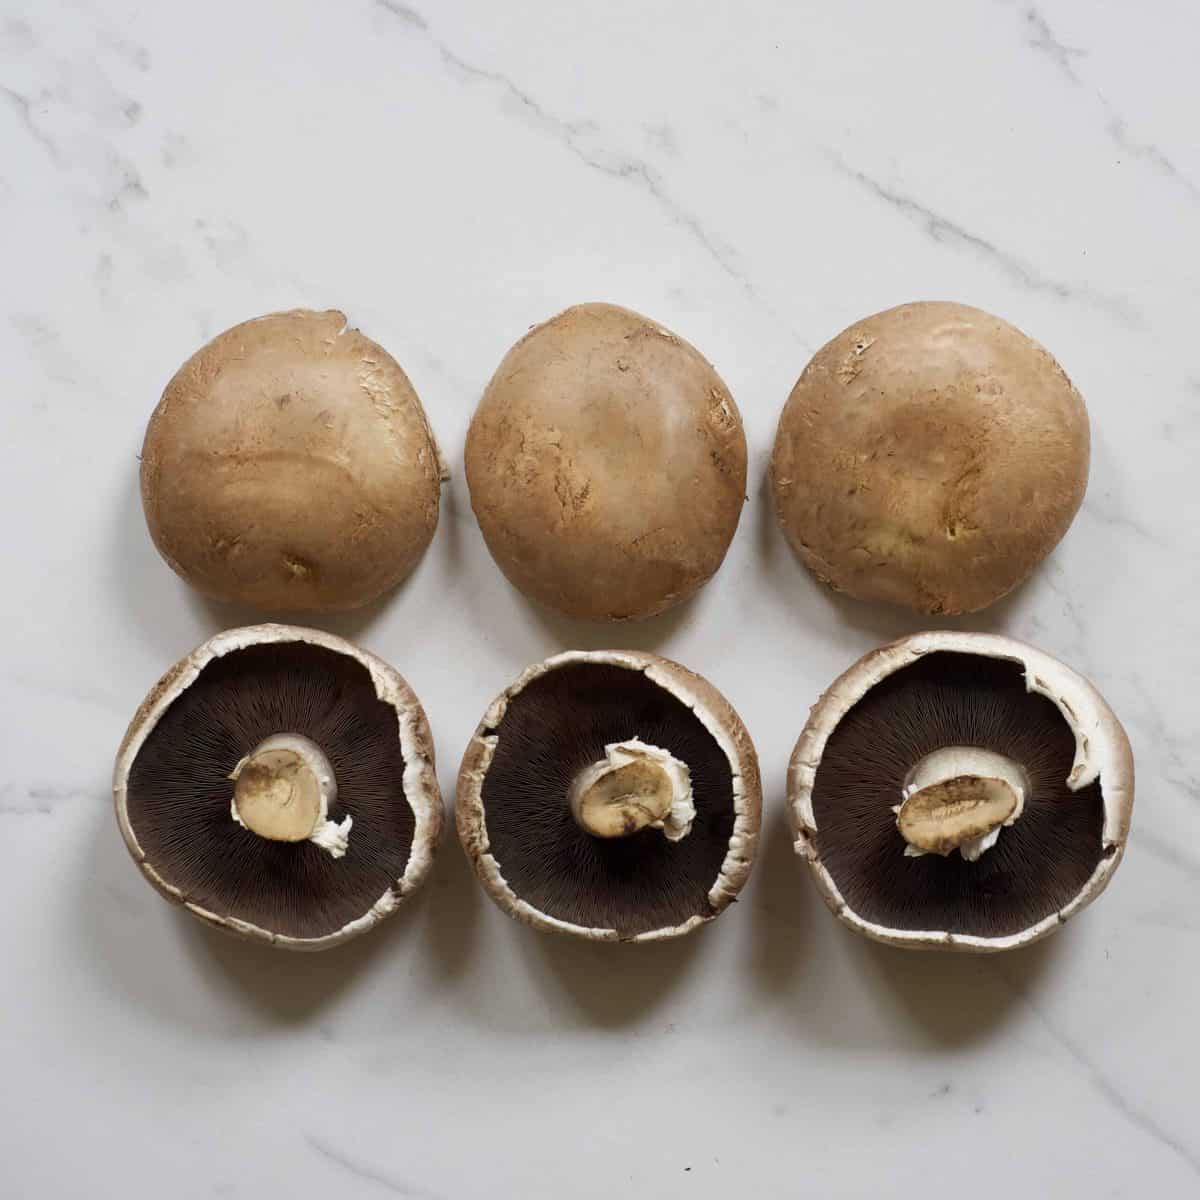 Portobello mushrooms